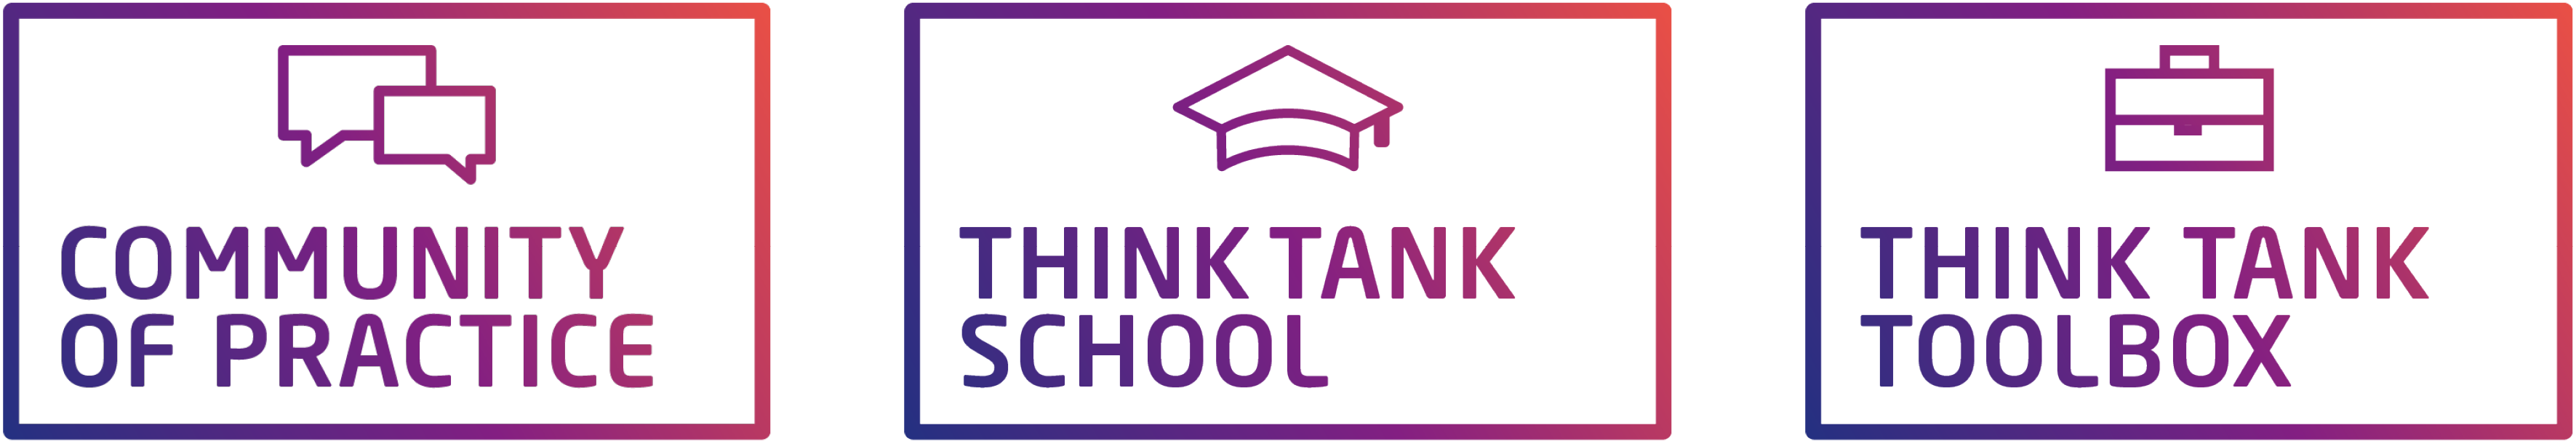 MERICS-Think-Tank-Lab-School-Toolbox-Community-of-practice.png